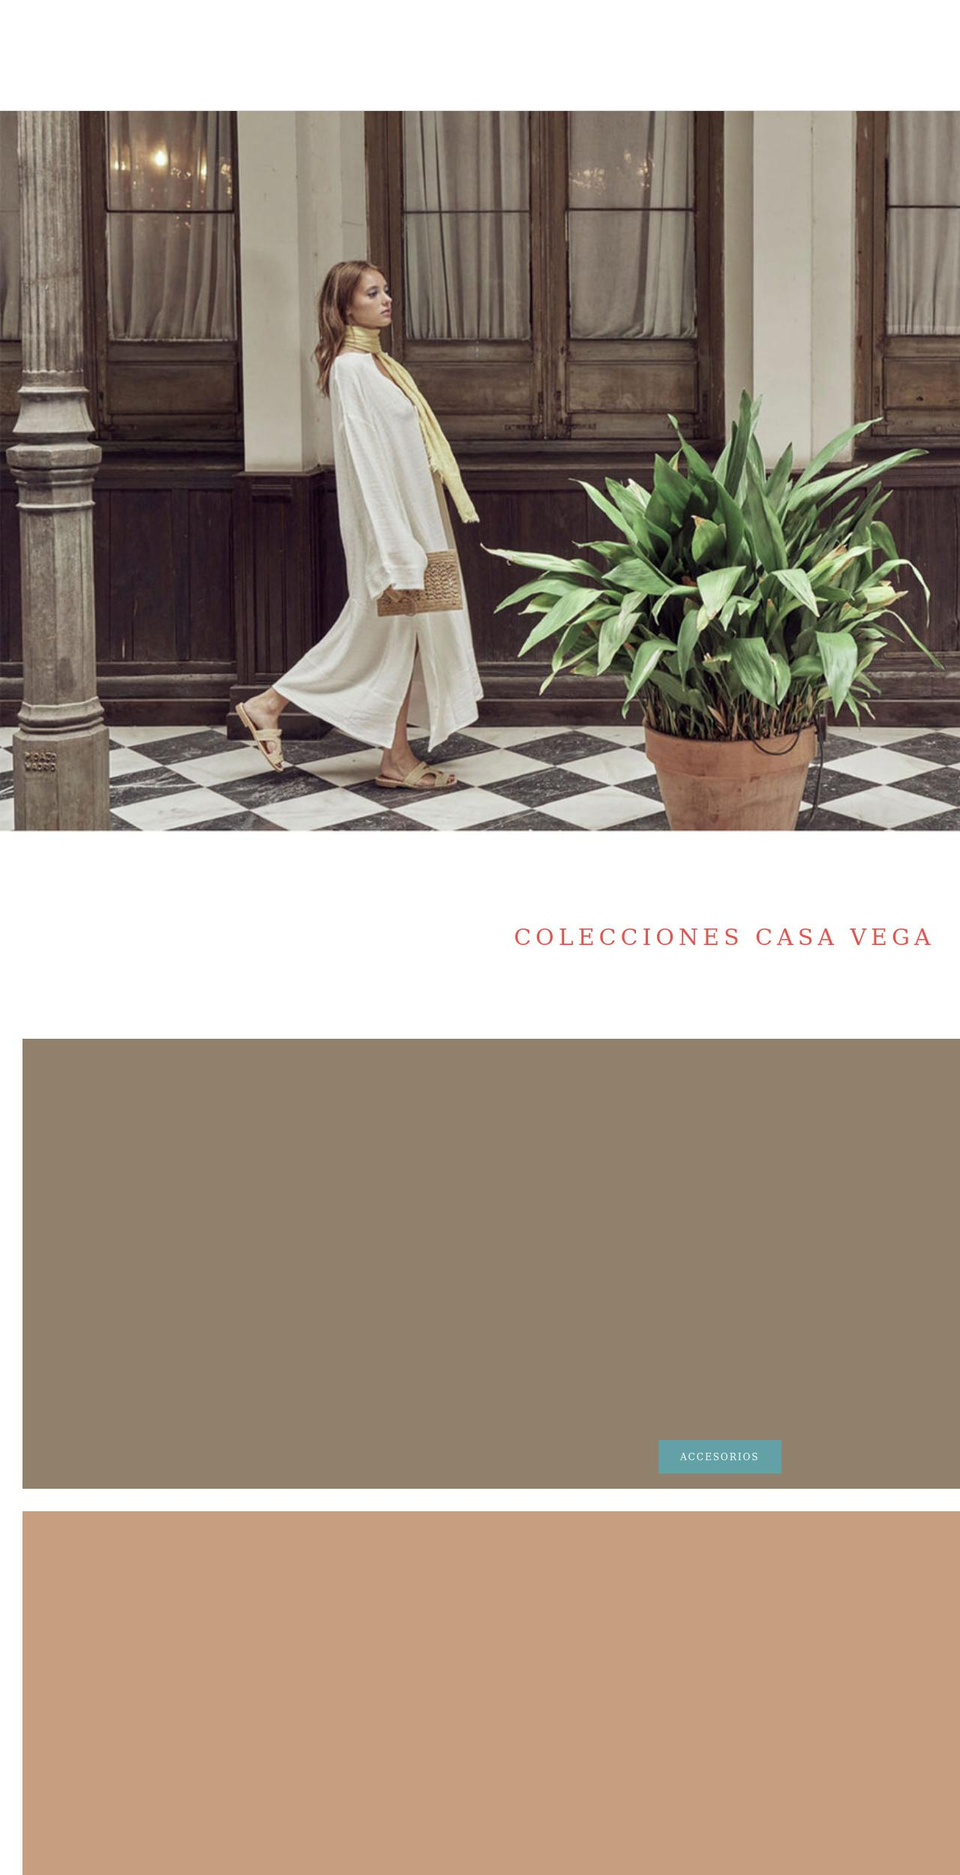 casavega.es shopify website screenshot